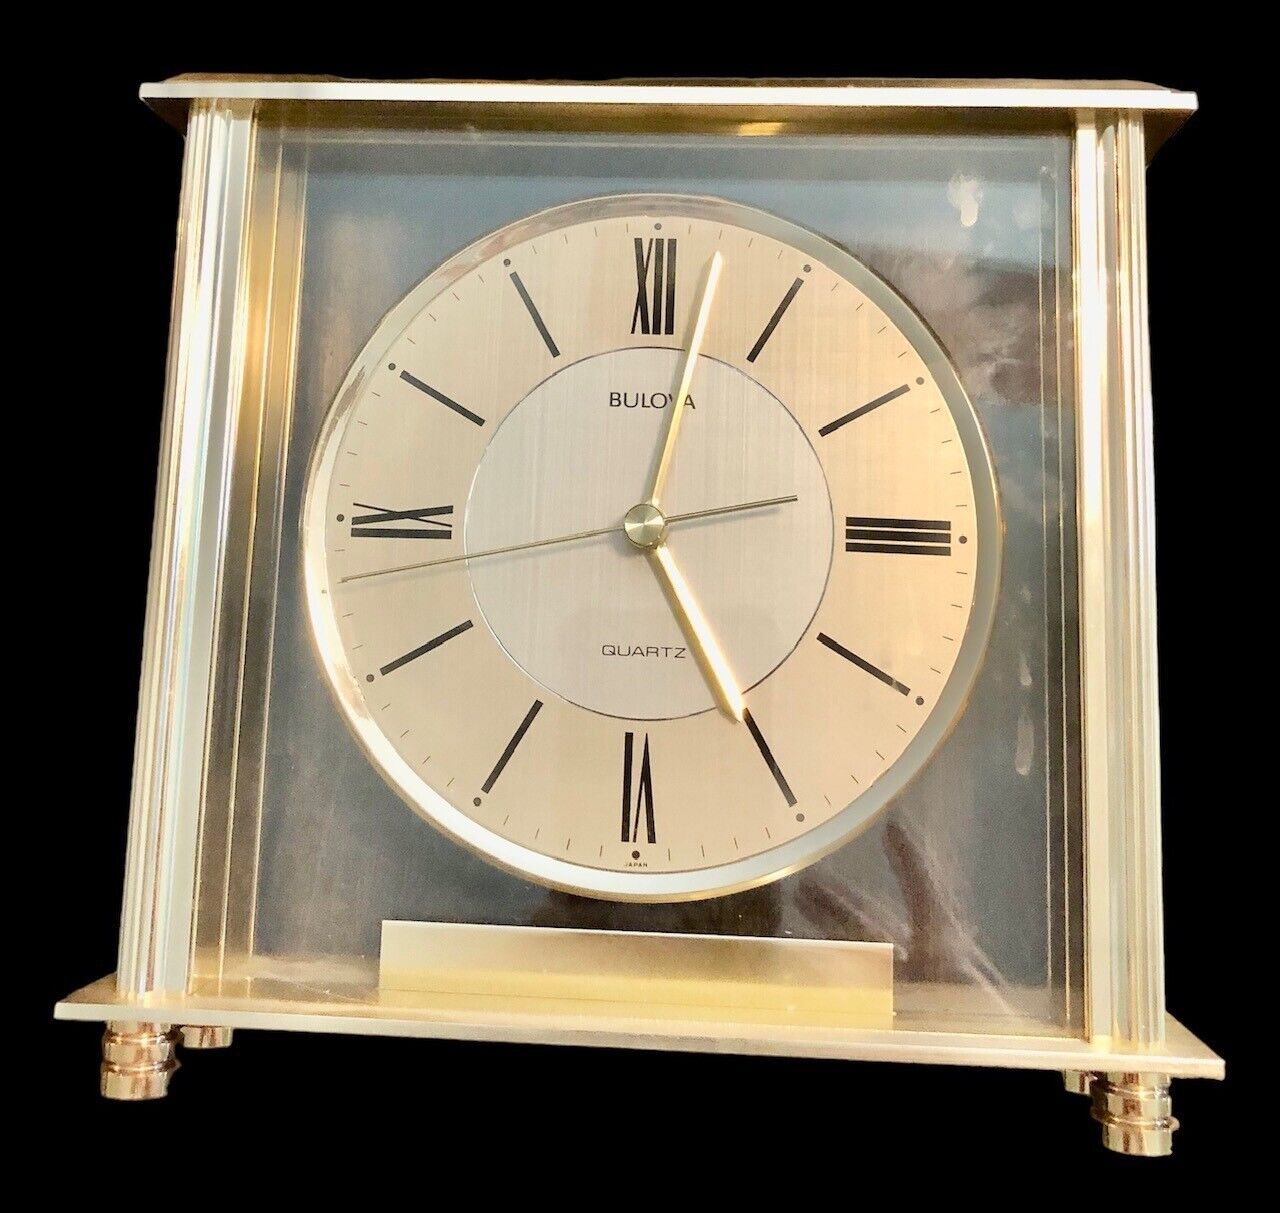 Bulova Grand Prix quartz gold tone footed mantel clock B1700 tested with battery